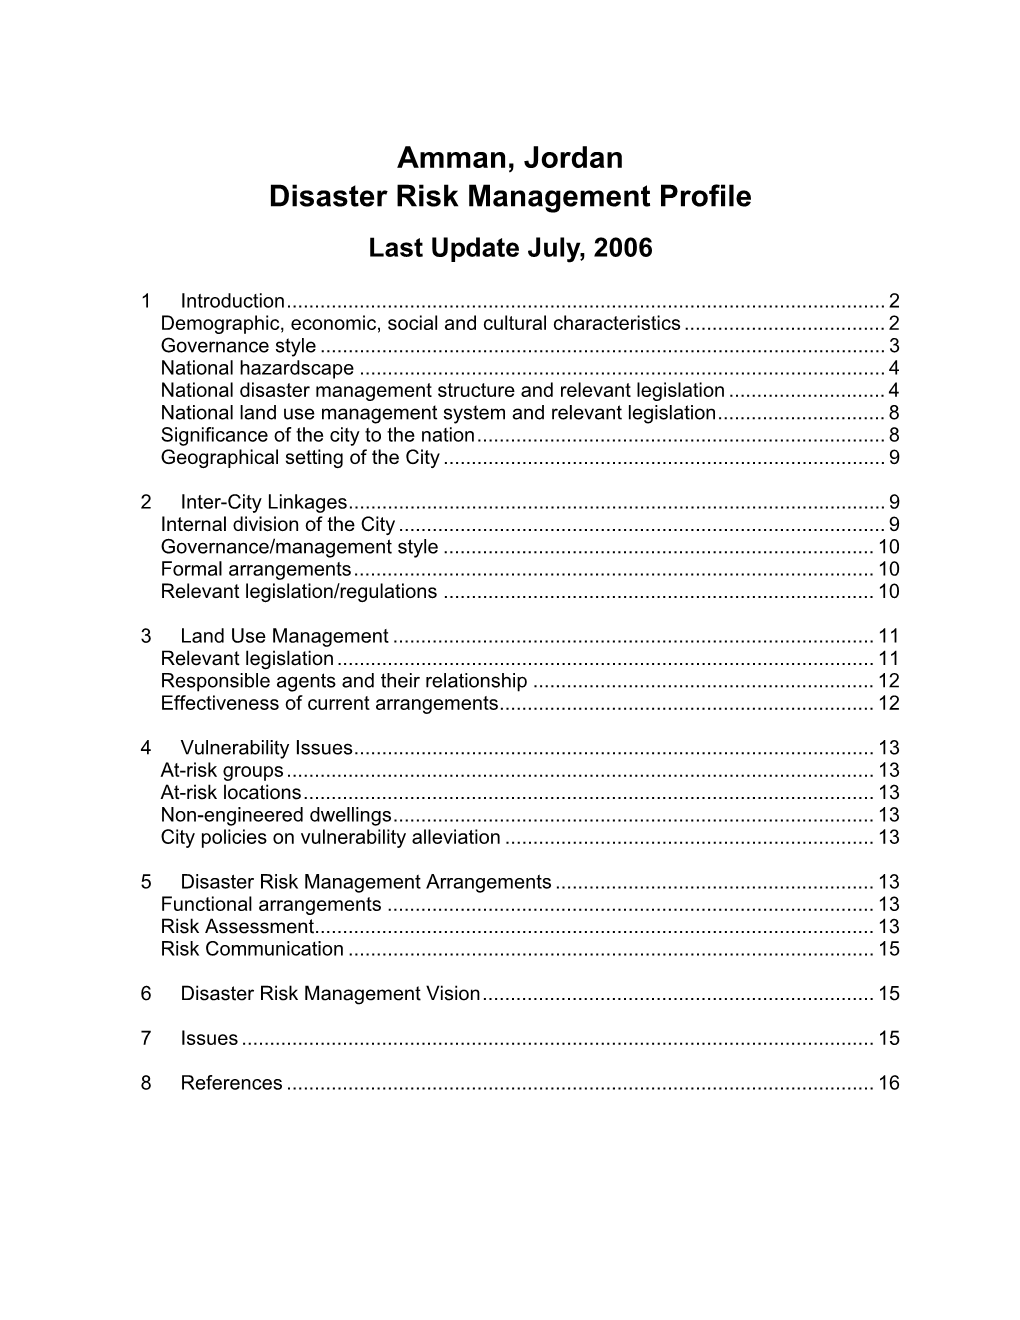 Amman, Jordan Disaster Risk Management Profile Last Update July, 2006